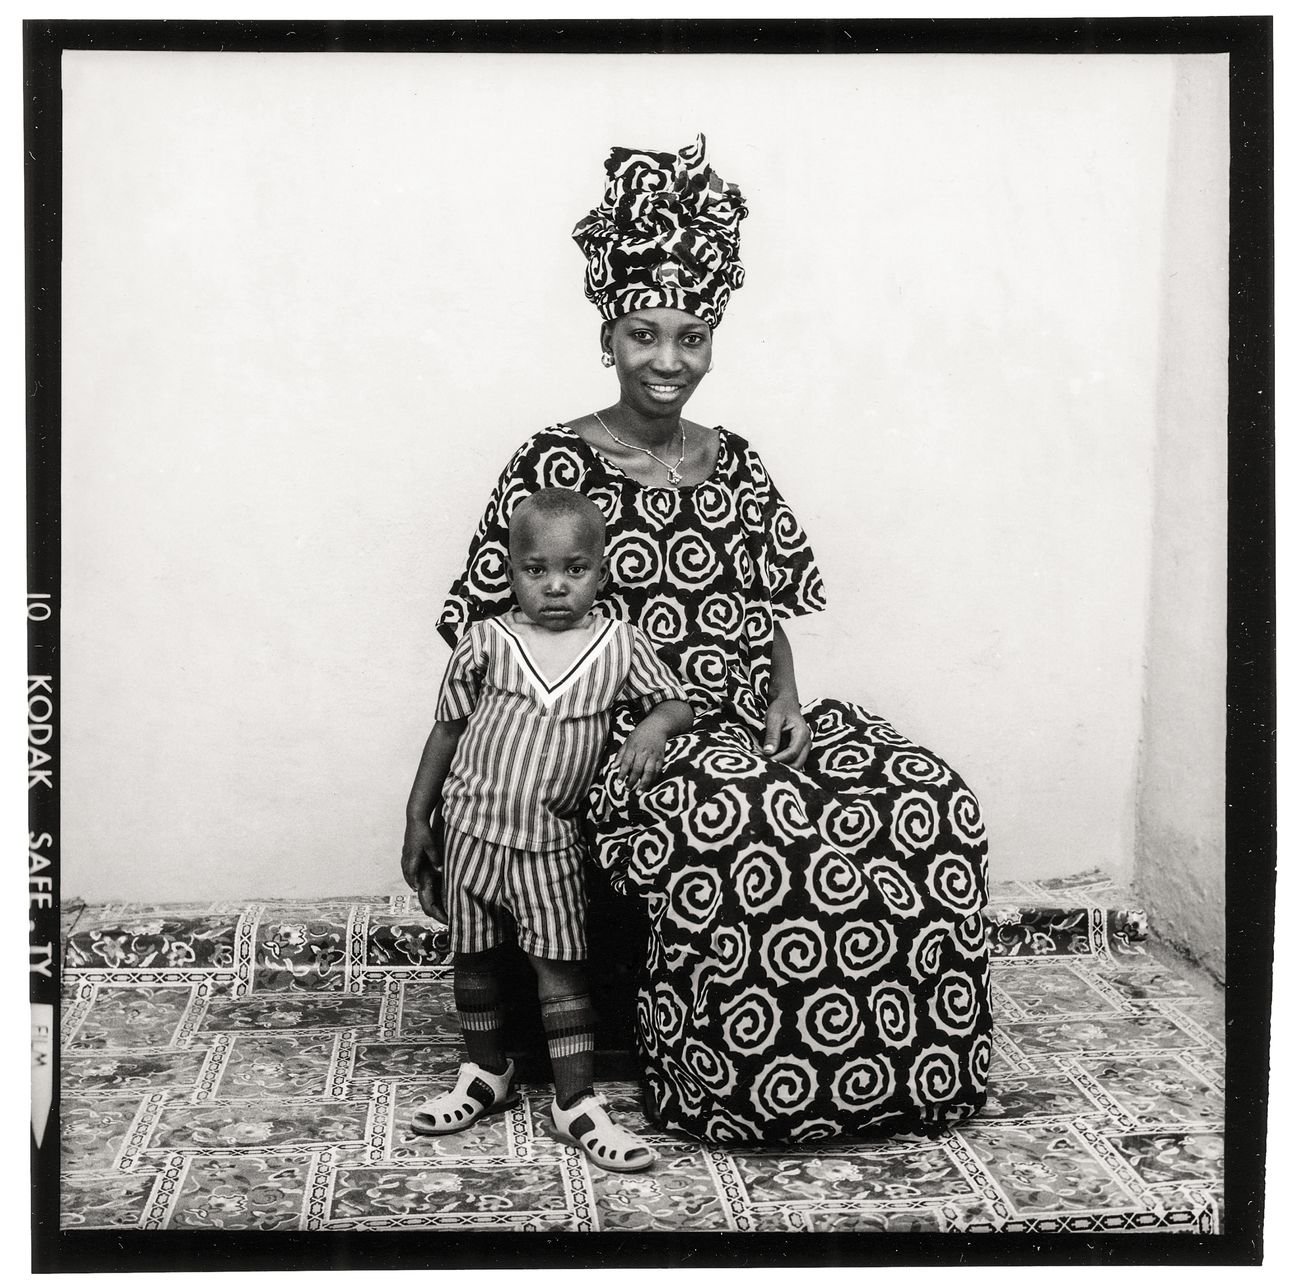 Malick Sidibé, Senza titolo, 1973. Courtesy succession Malick Sidibé © Malick Sidibé